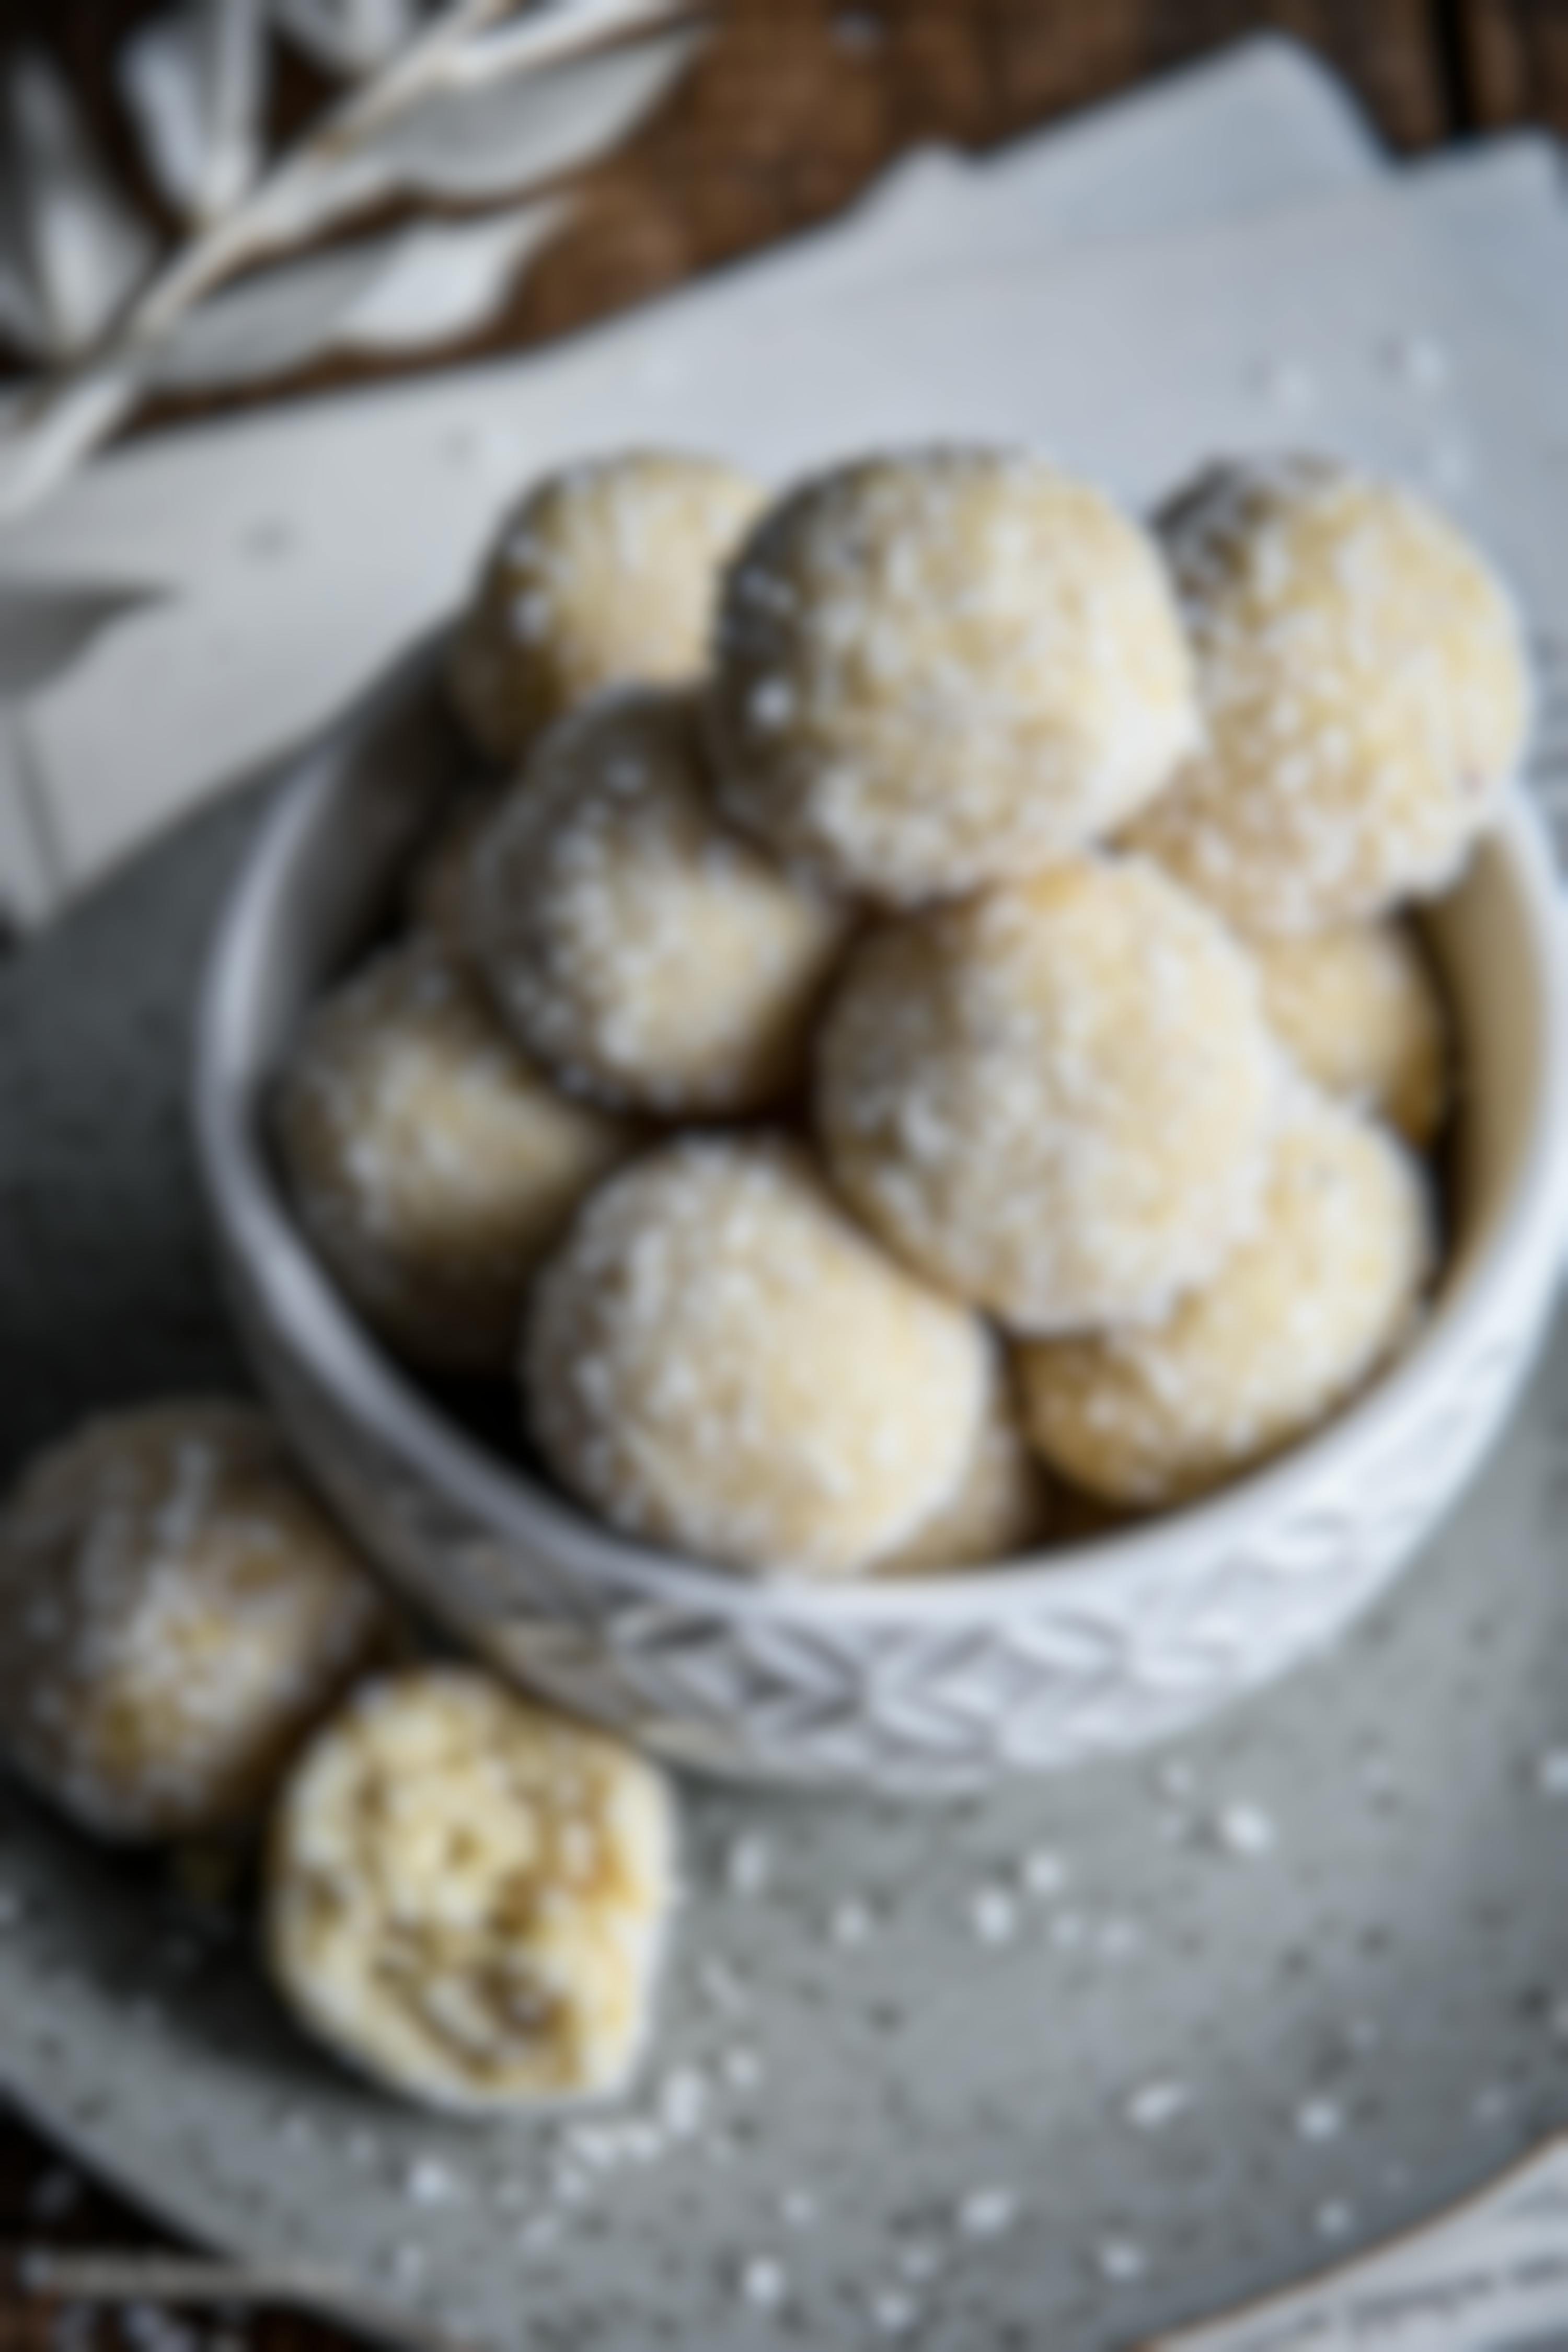 Coconut-cashew balls